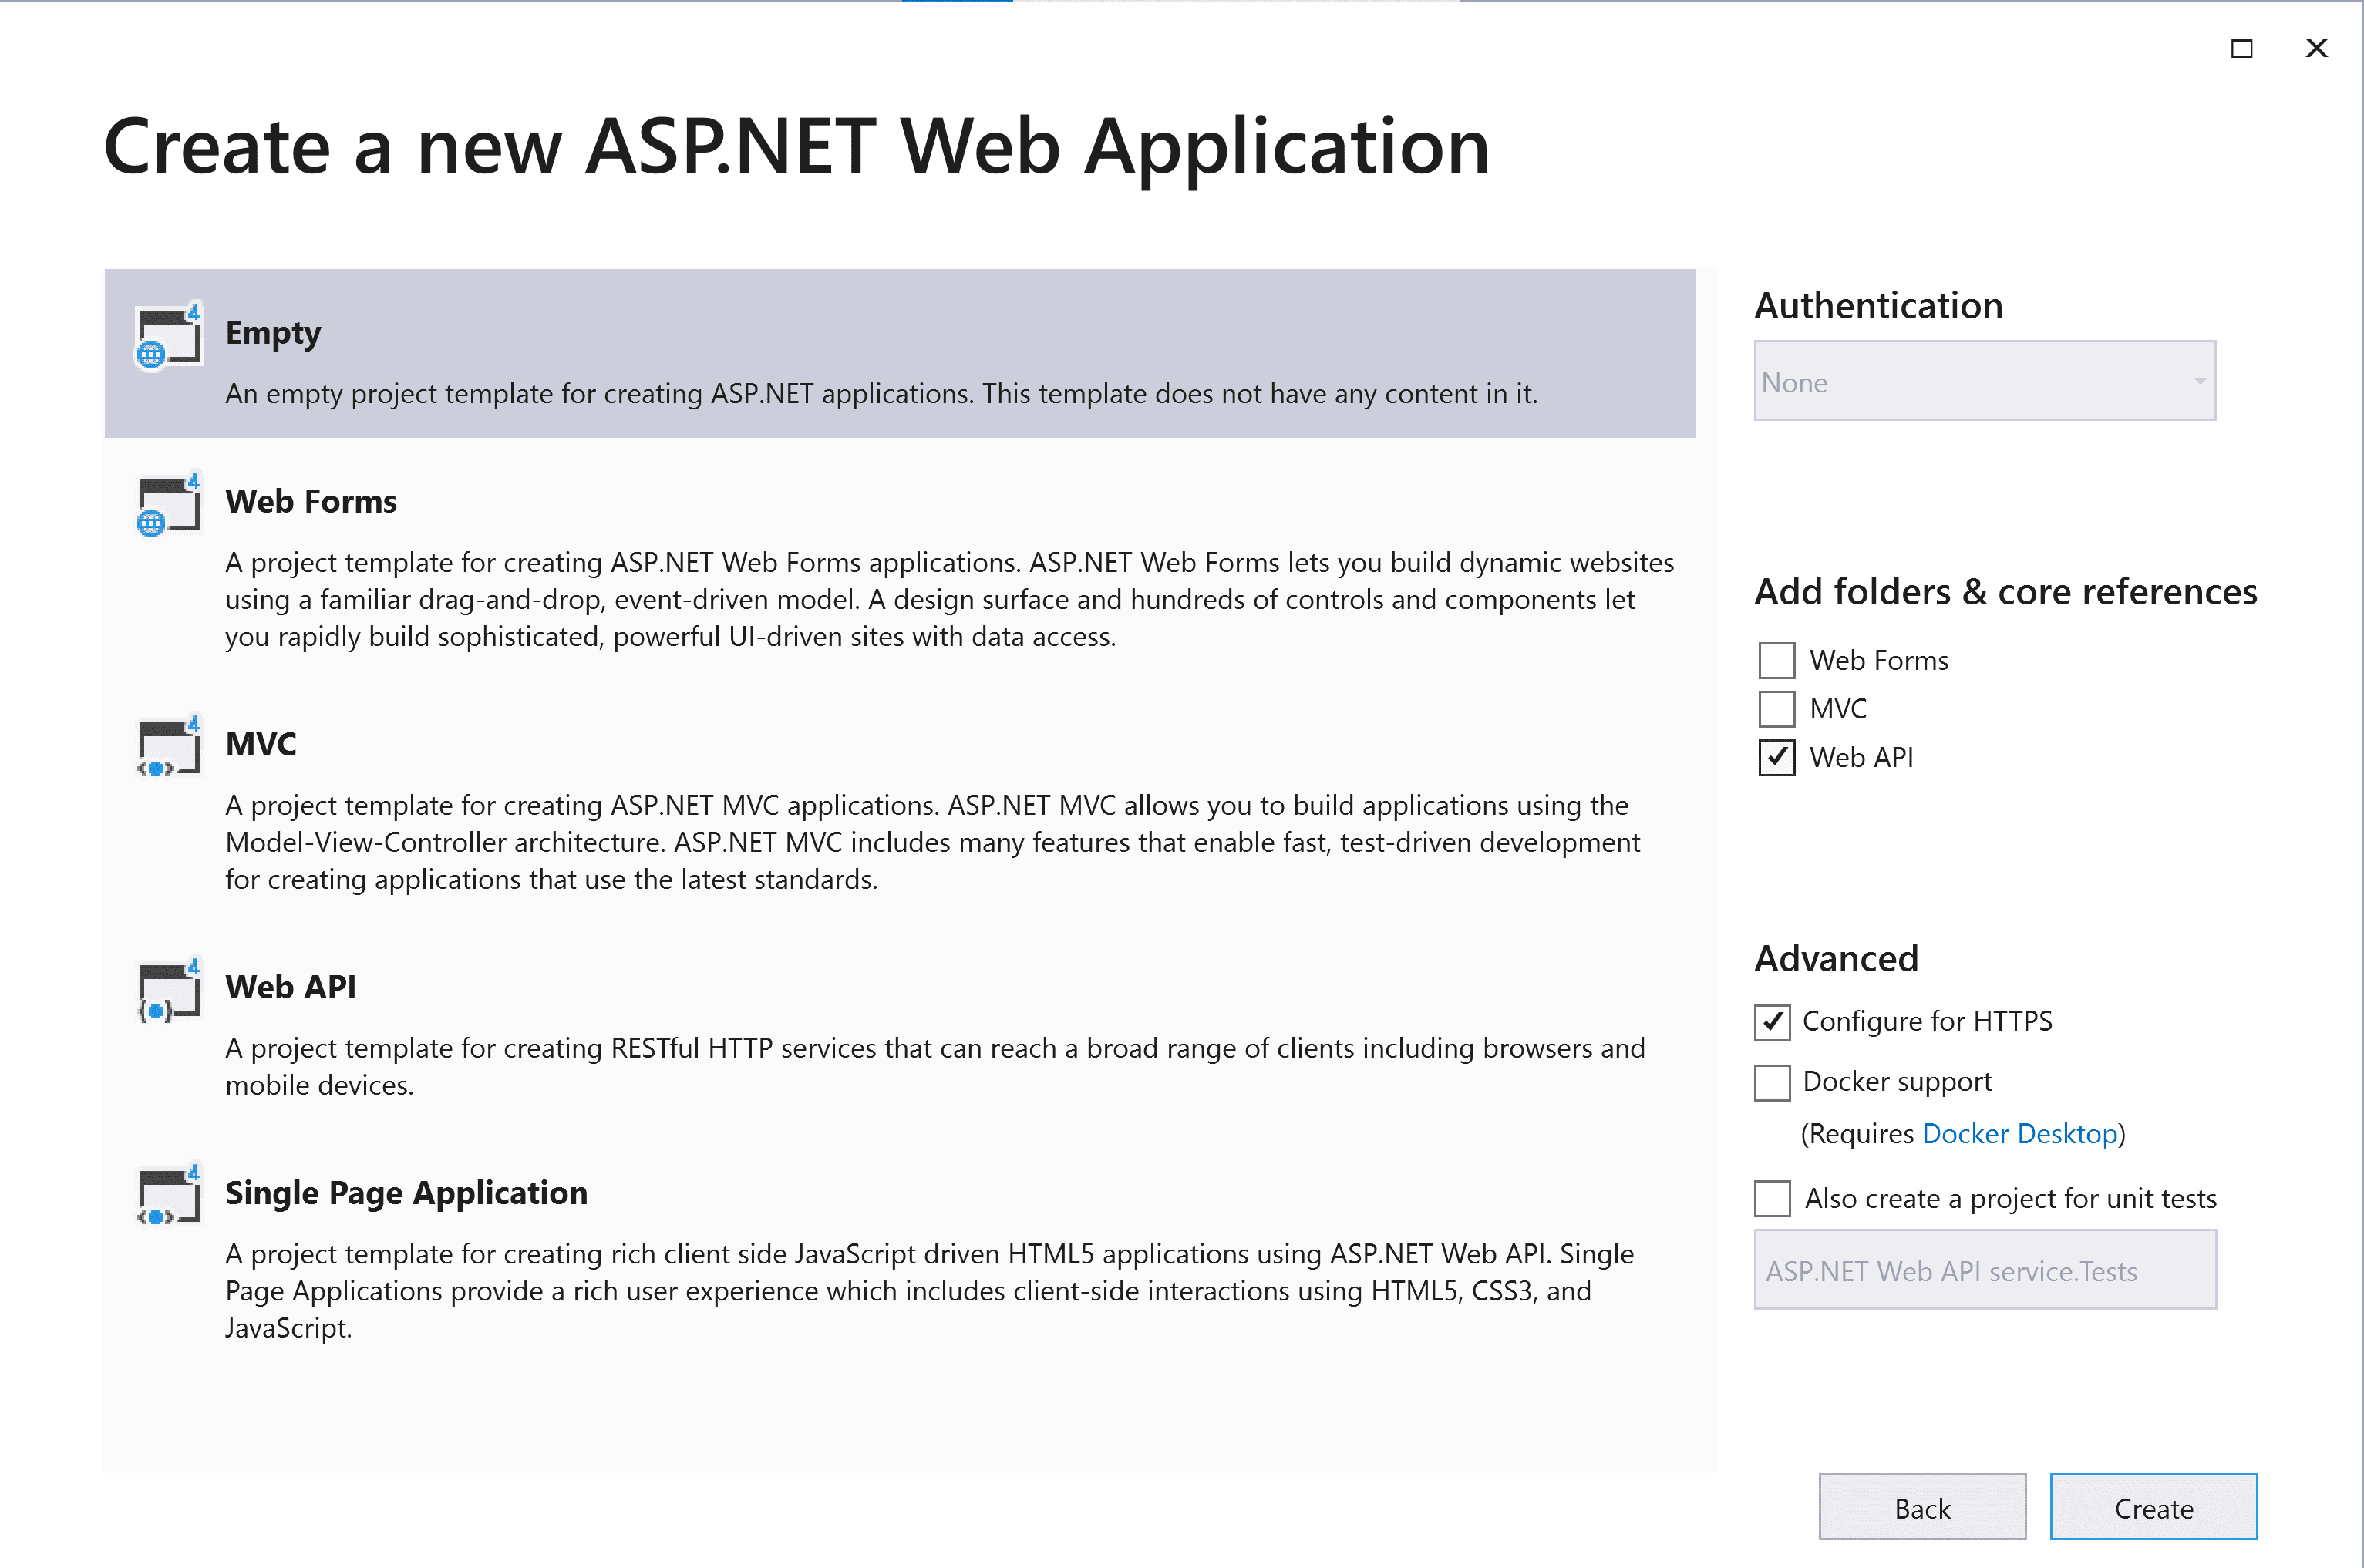 Select Web API and Empty options